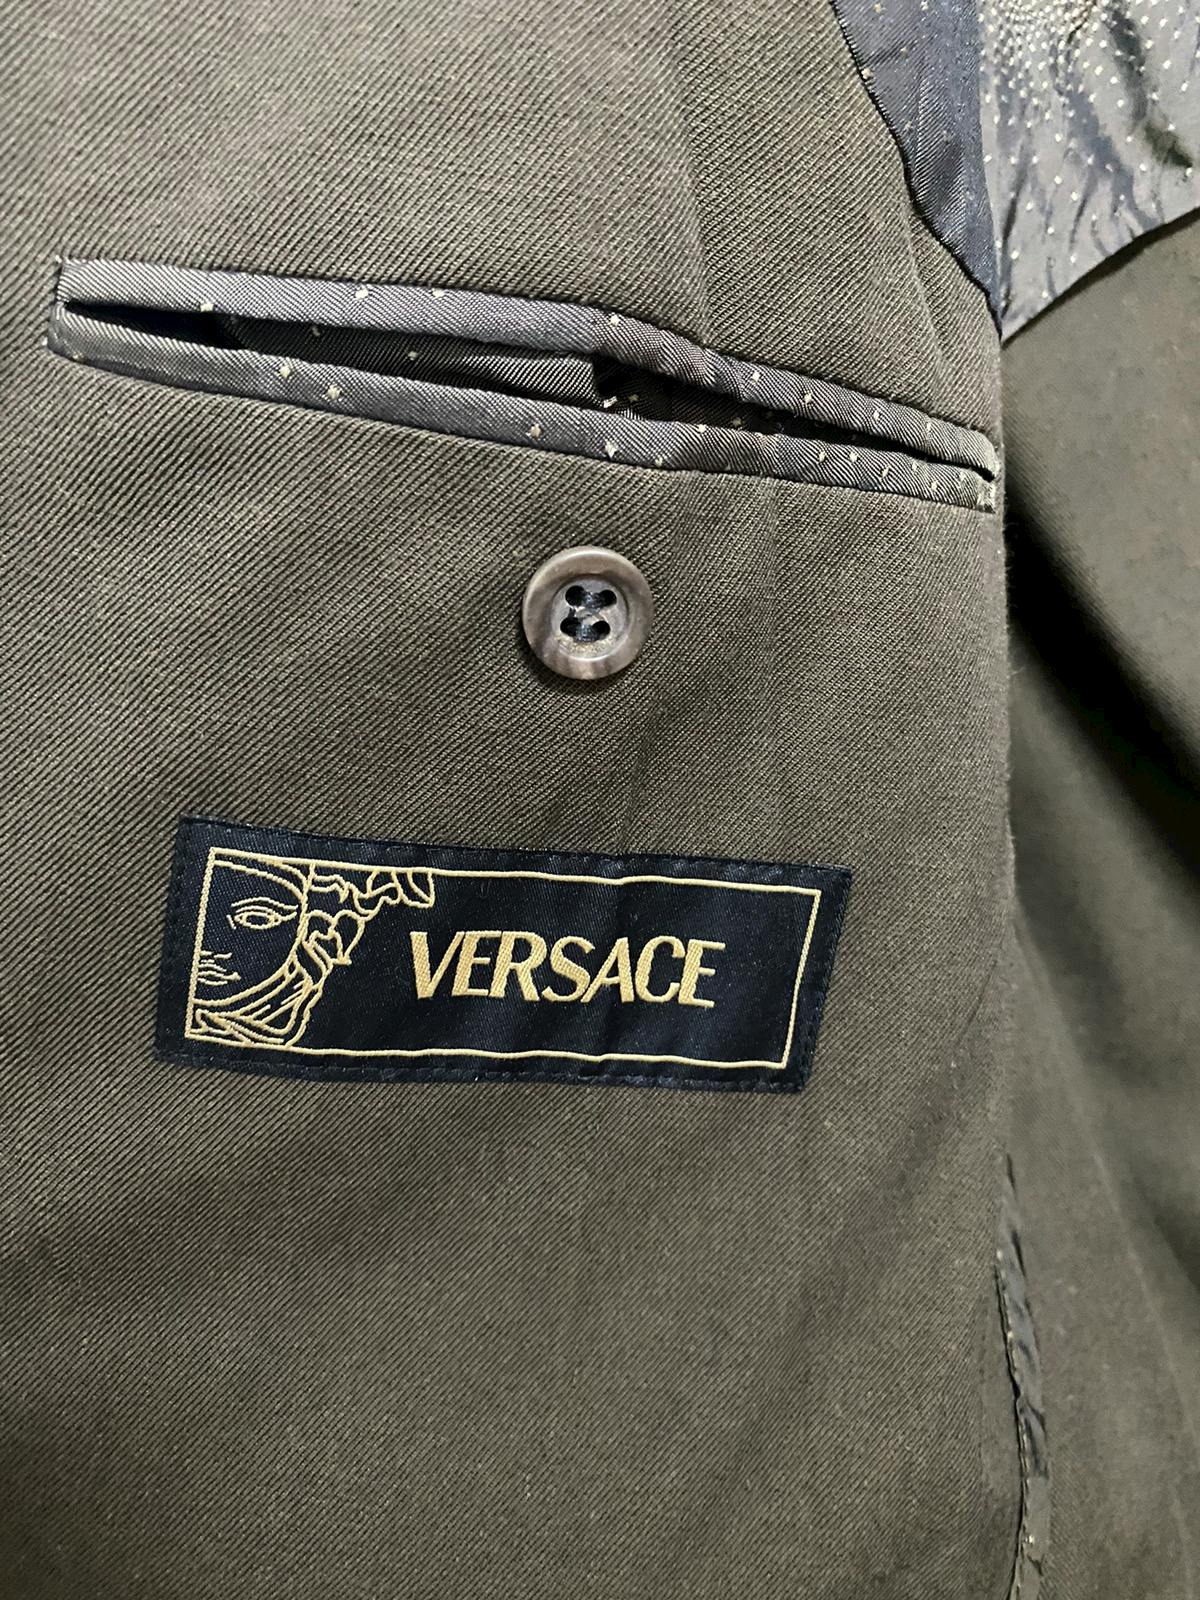 Vintage Versace Suit Jacket - 7